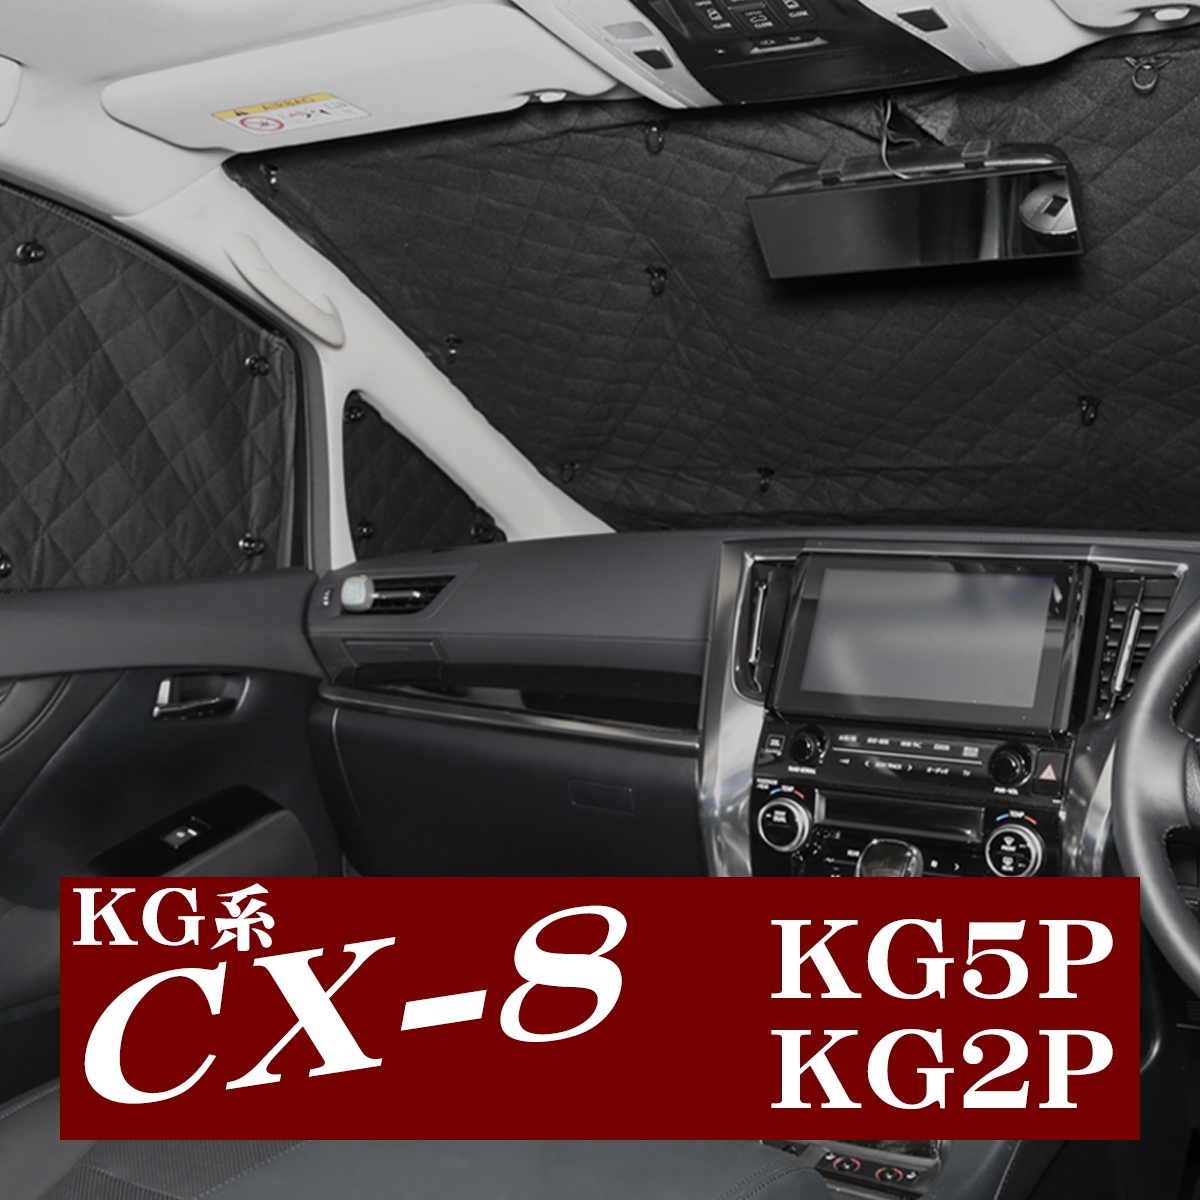 KG系 CX-8 サンシェード KG5P KG2P 全窓用 車中泊 アウトドア 日よけ 